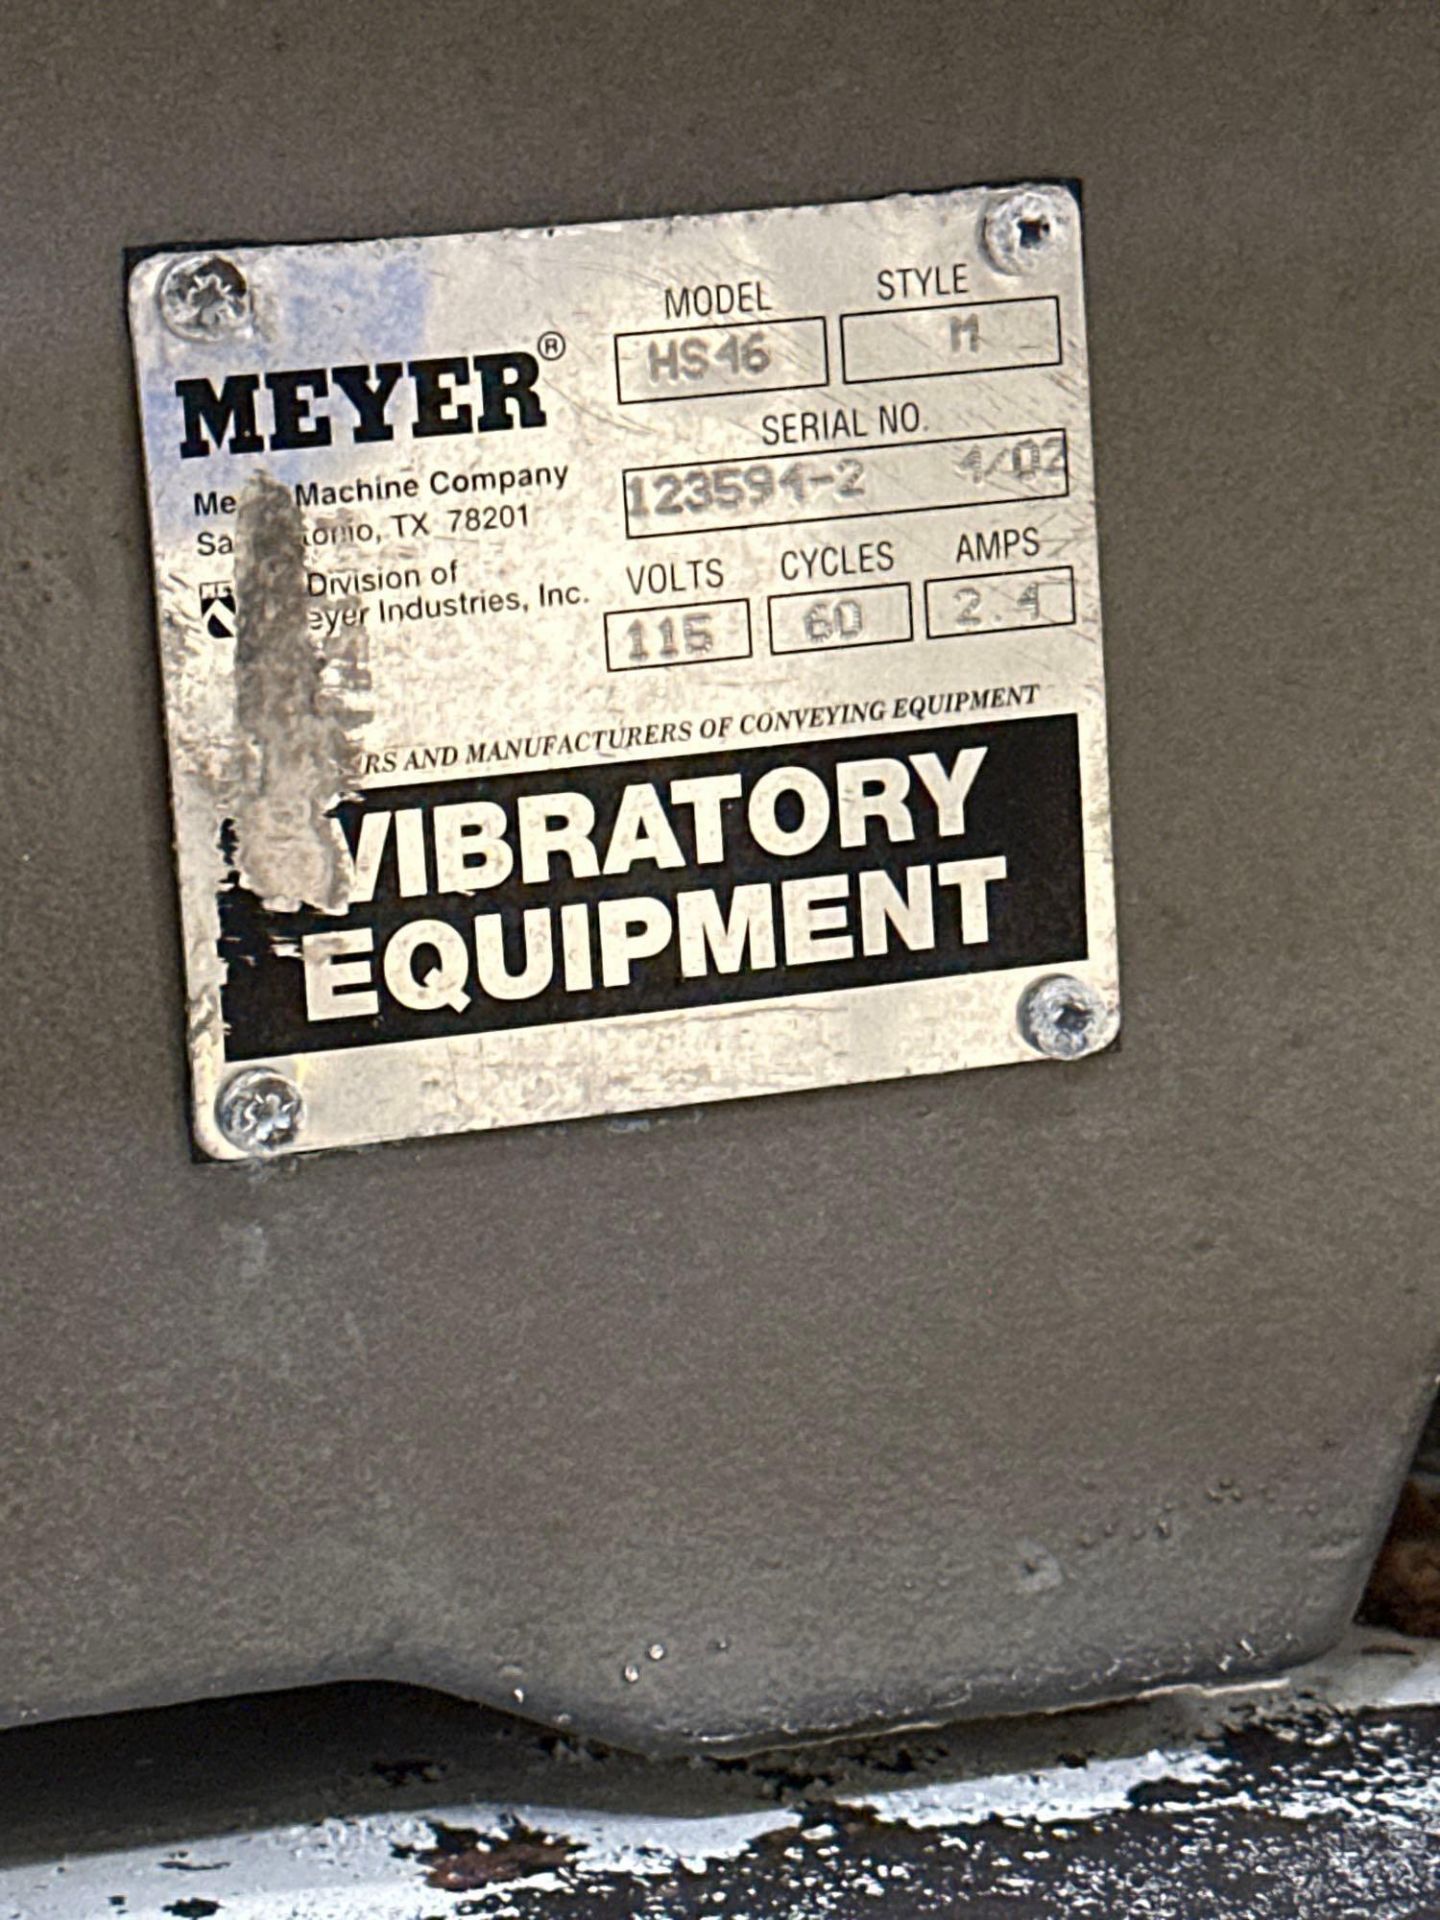 Meyer HS46 42" x 14" Stainless Steel Vibratory Conveyor - Image 5 of 6